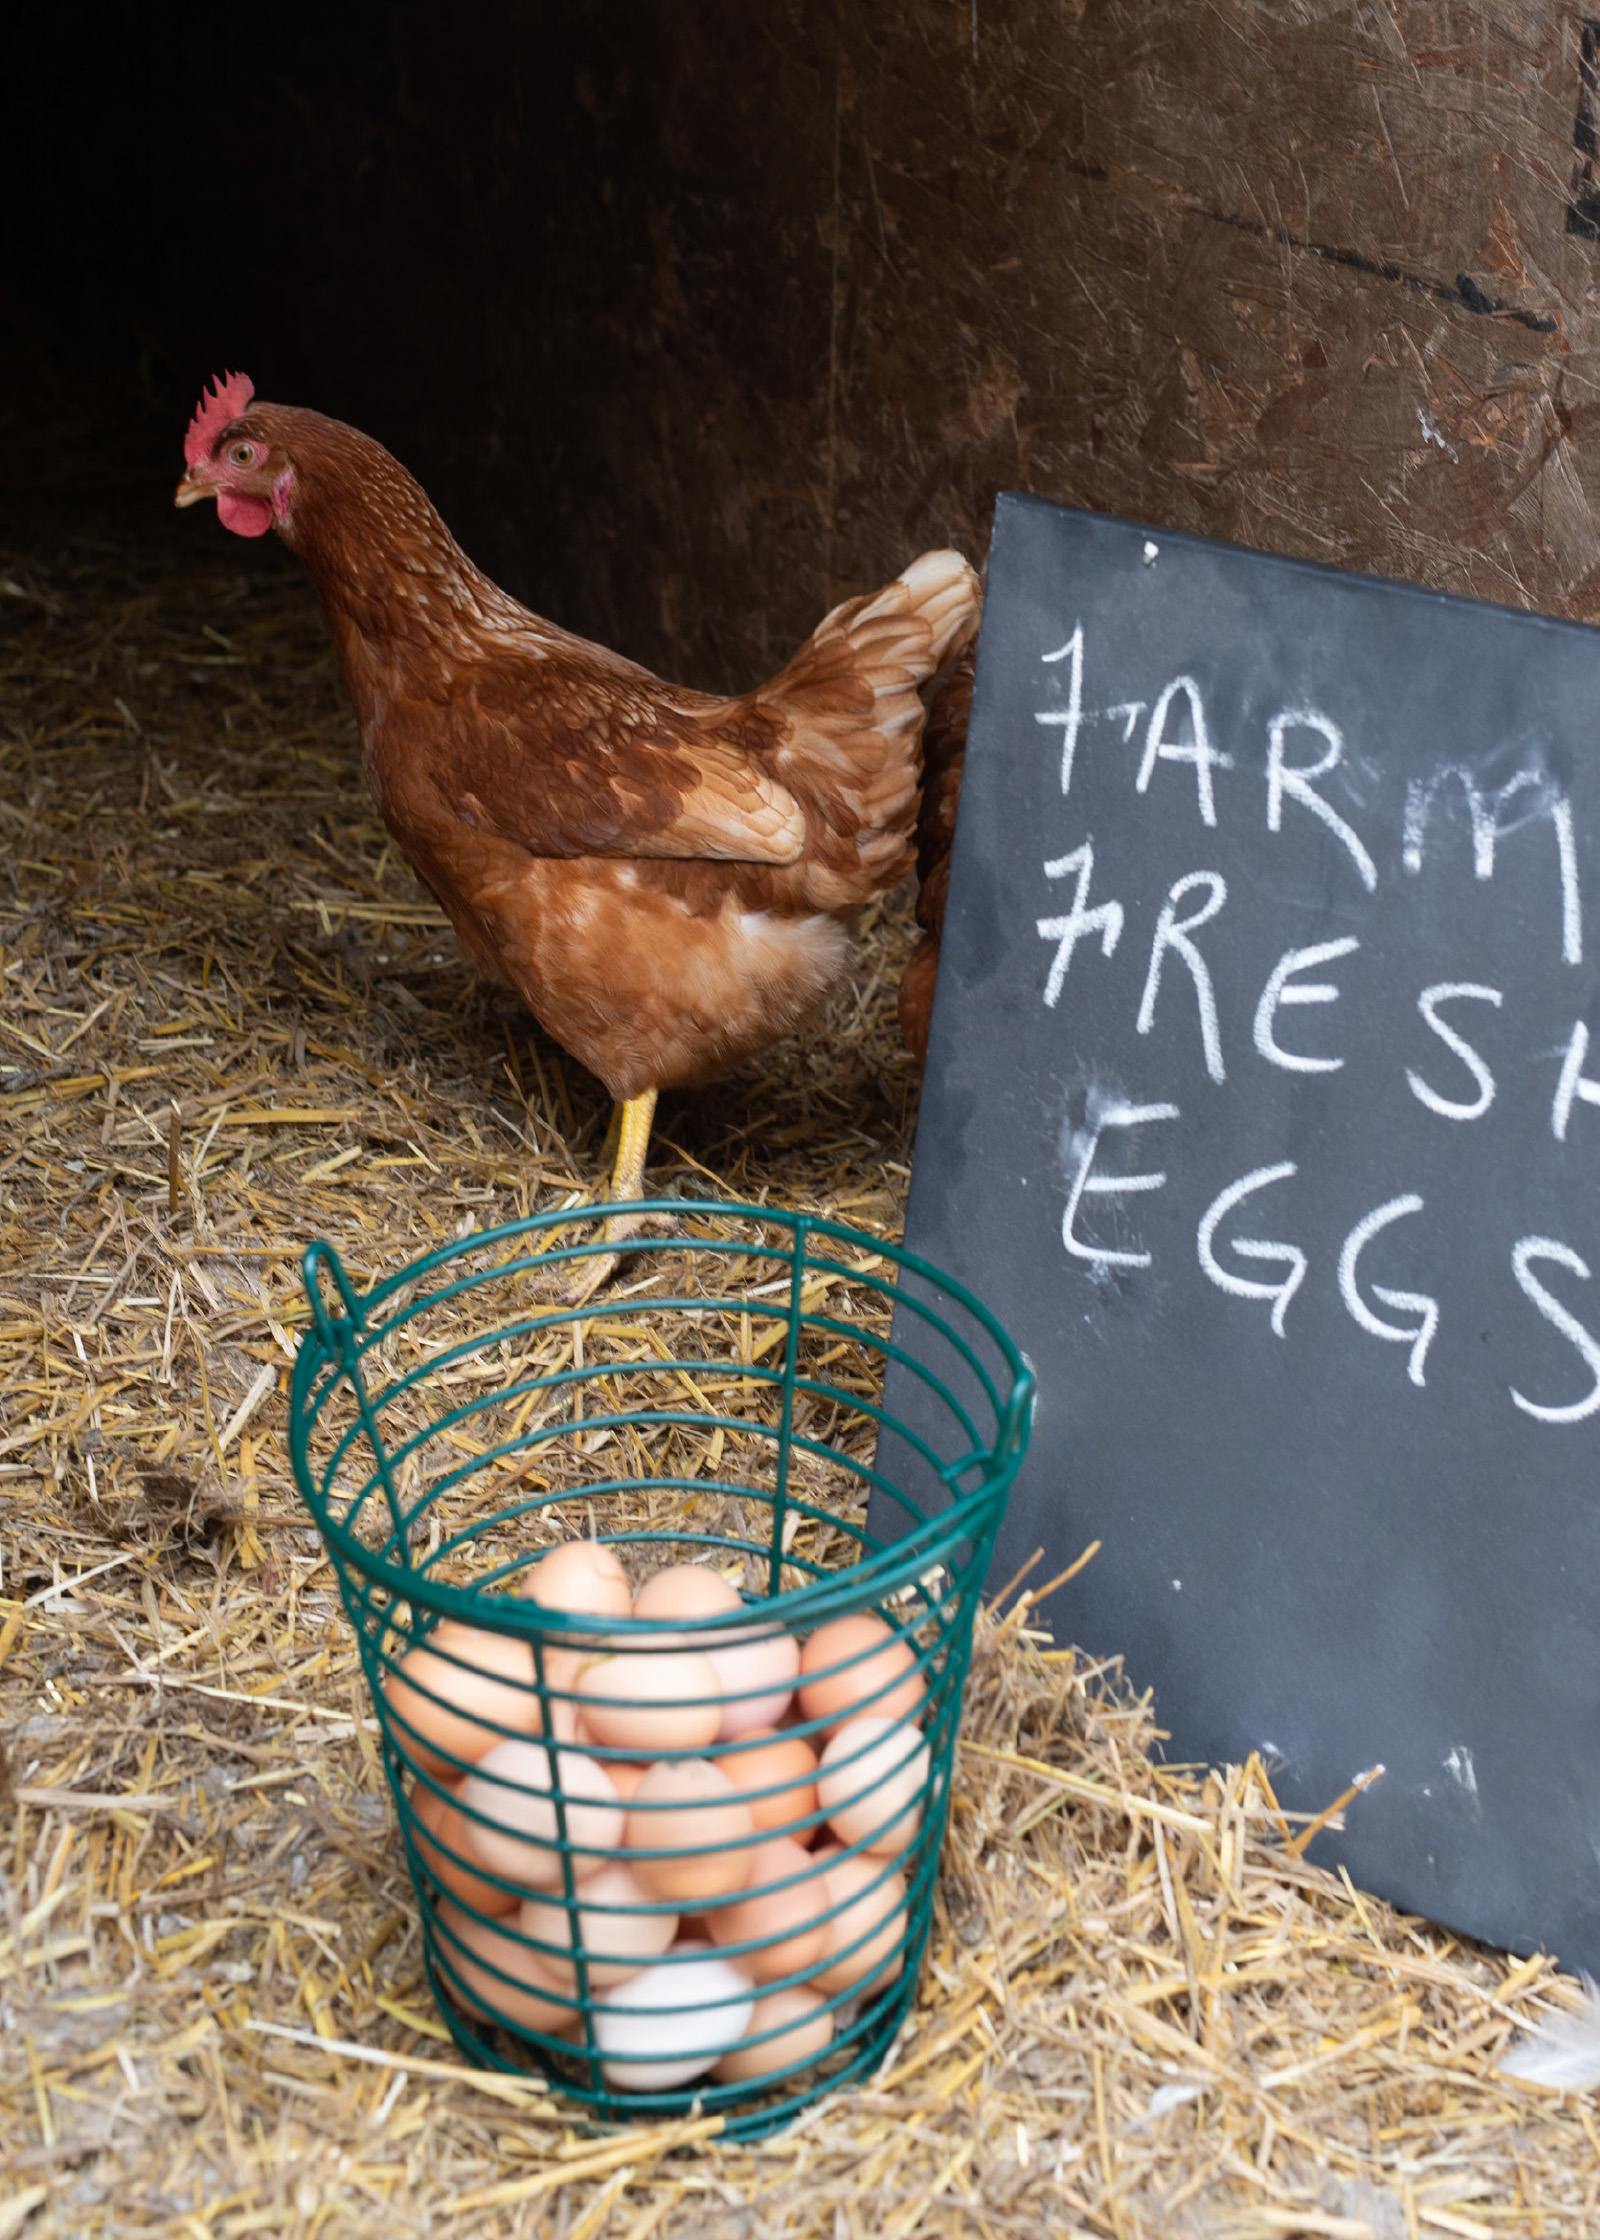 Pasture raised eggs V